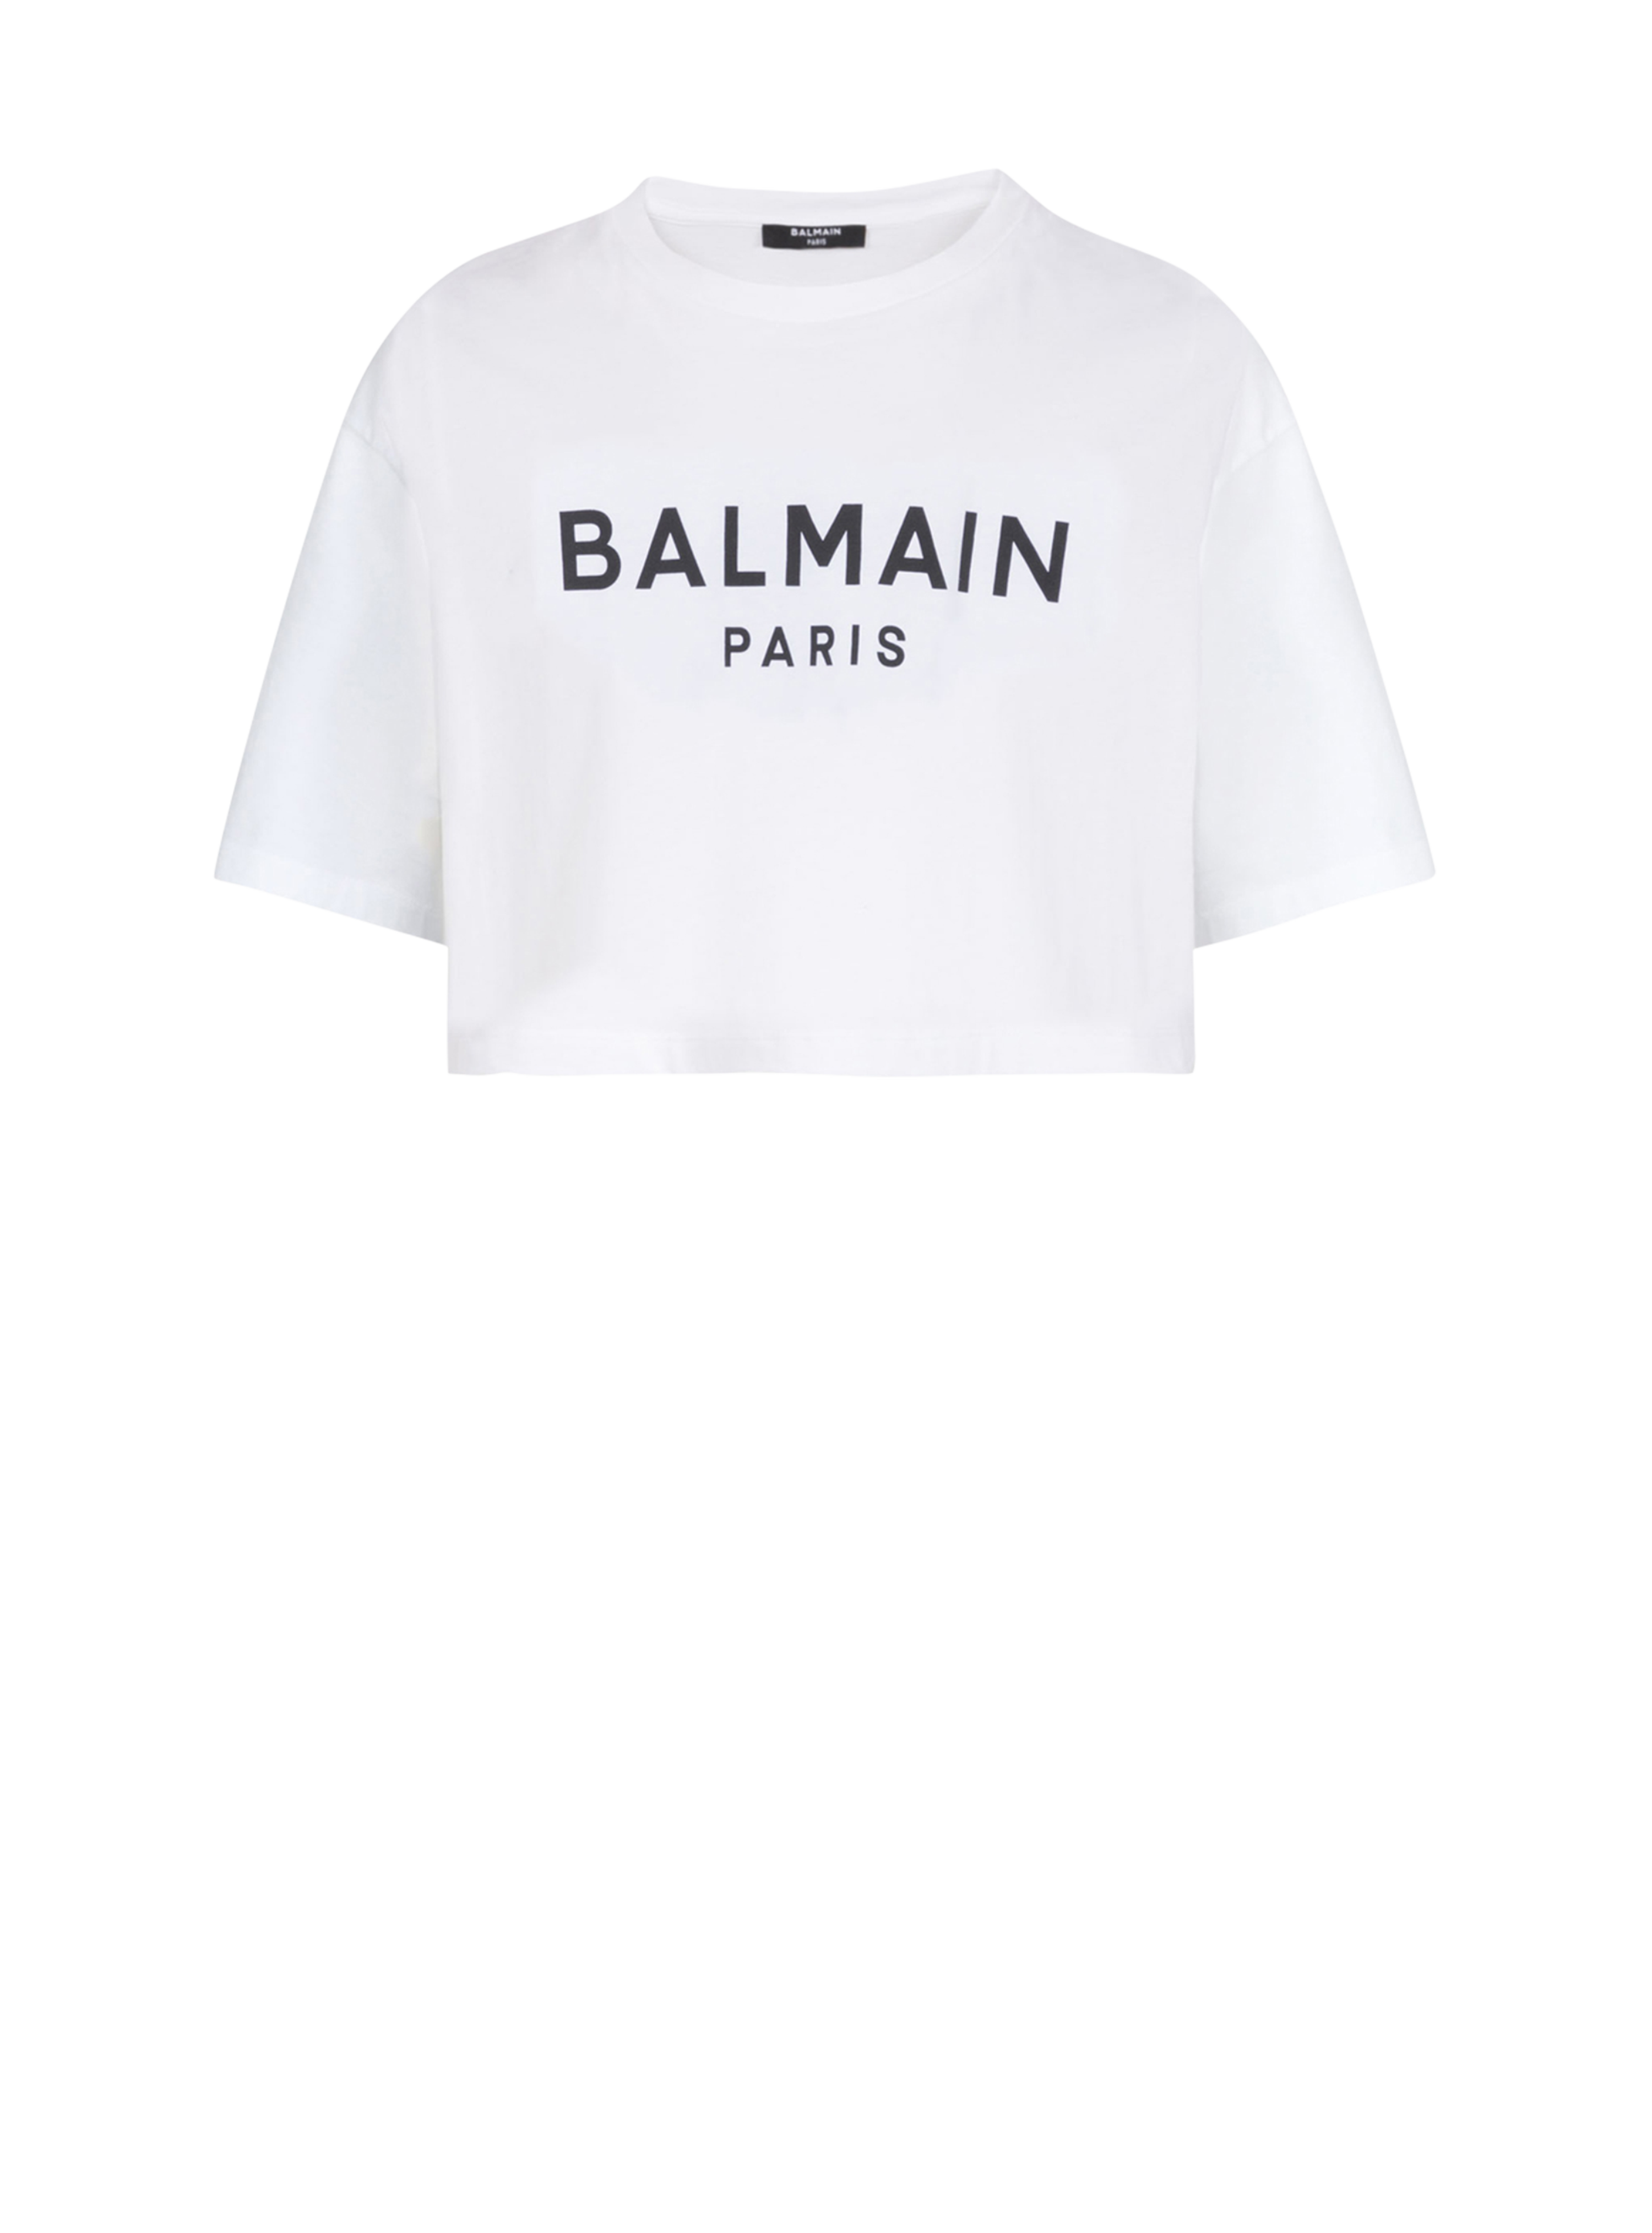 T-shirt corta in cotone con logo Balmain, bianco